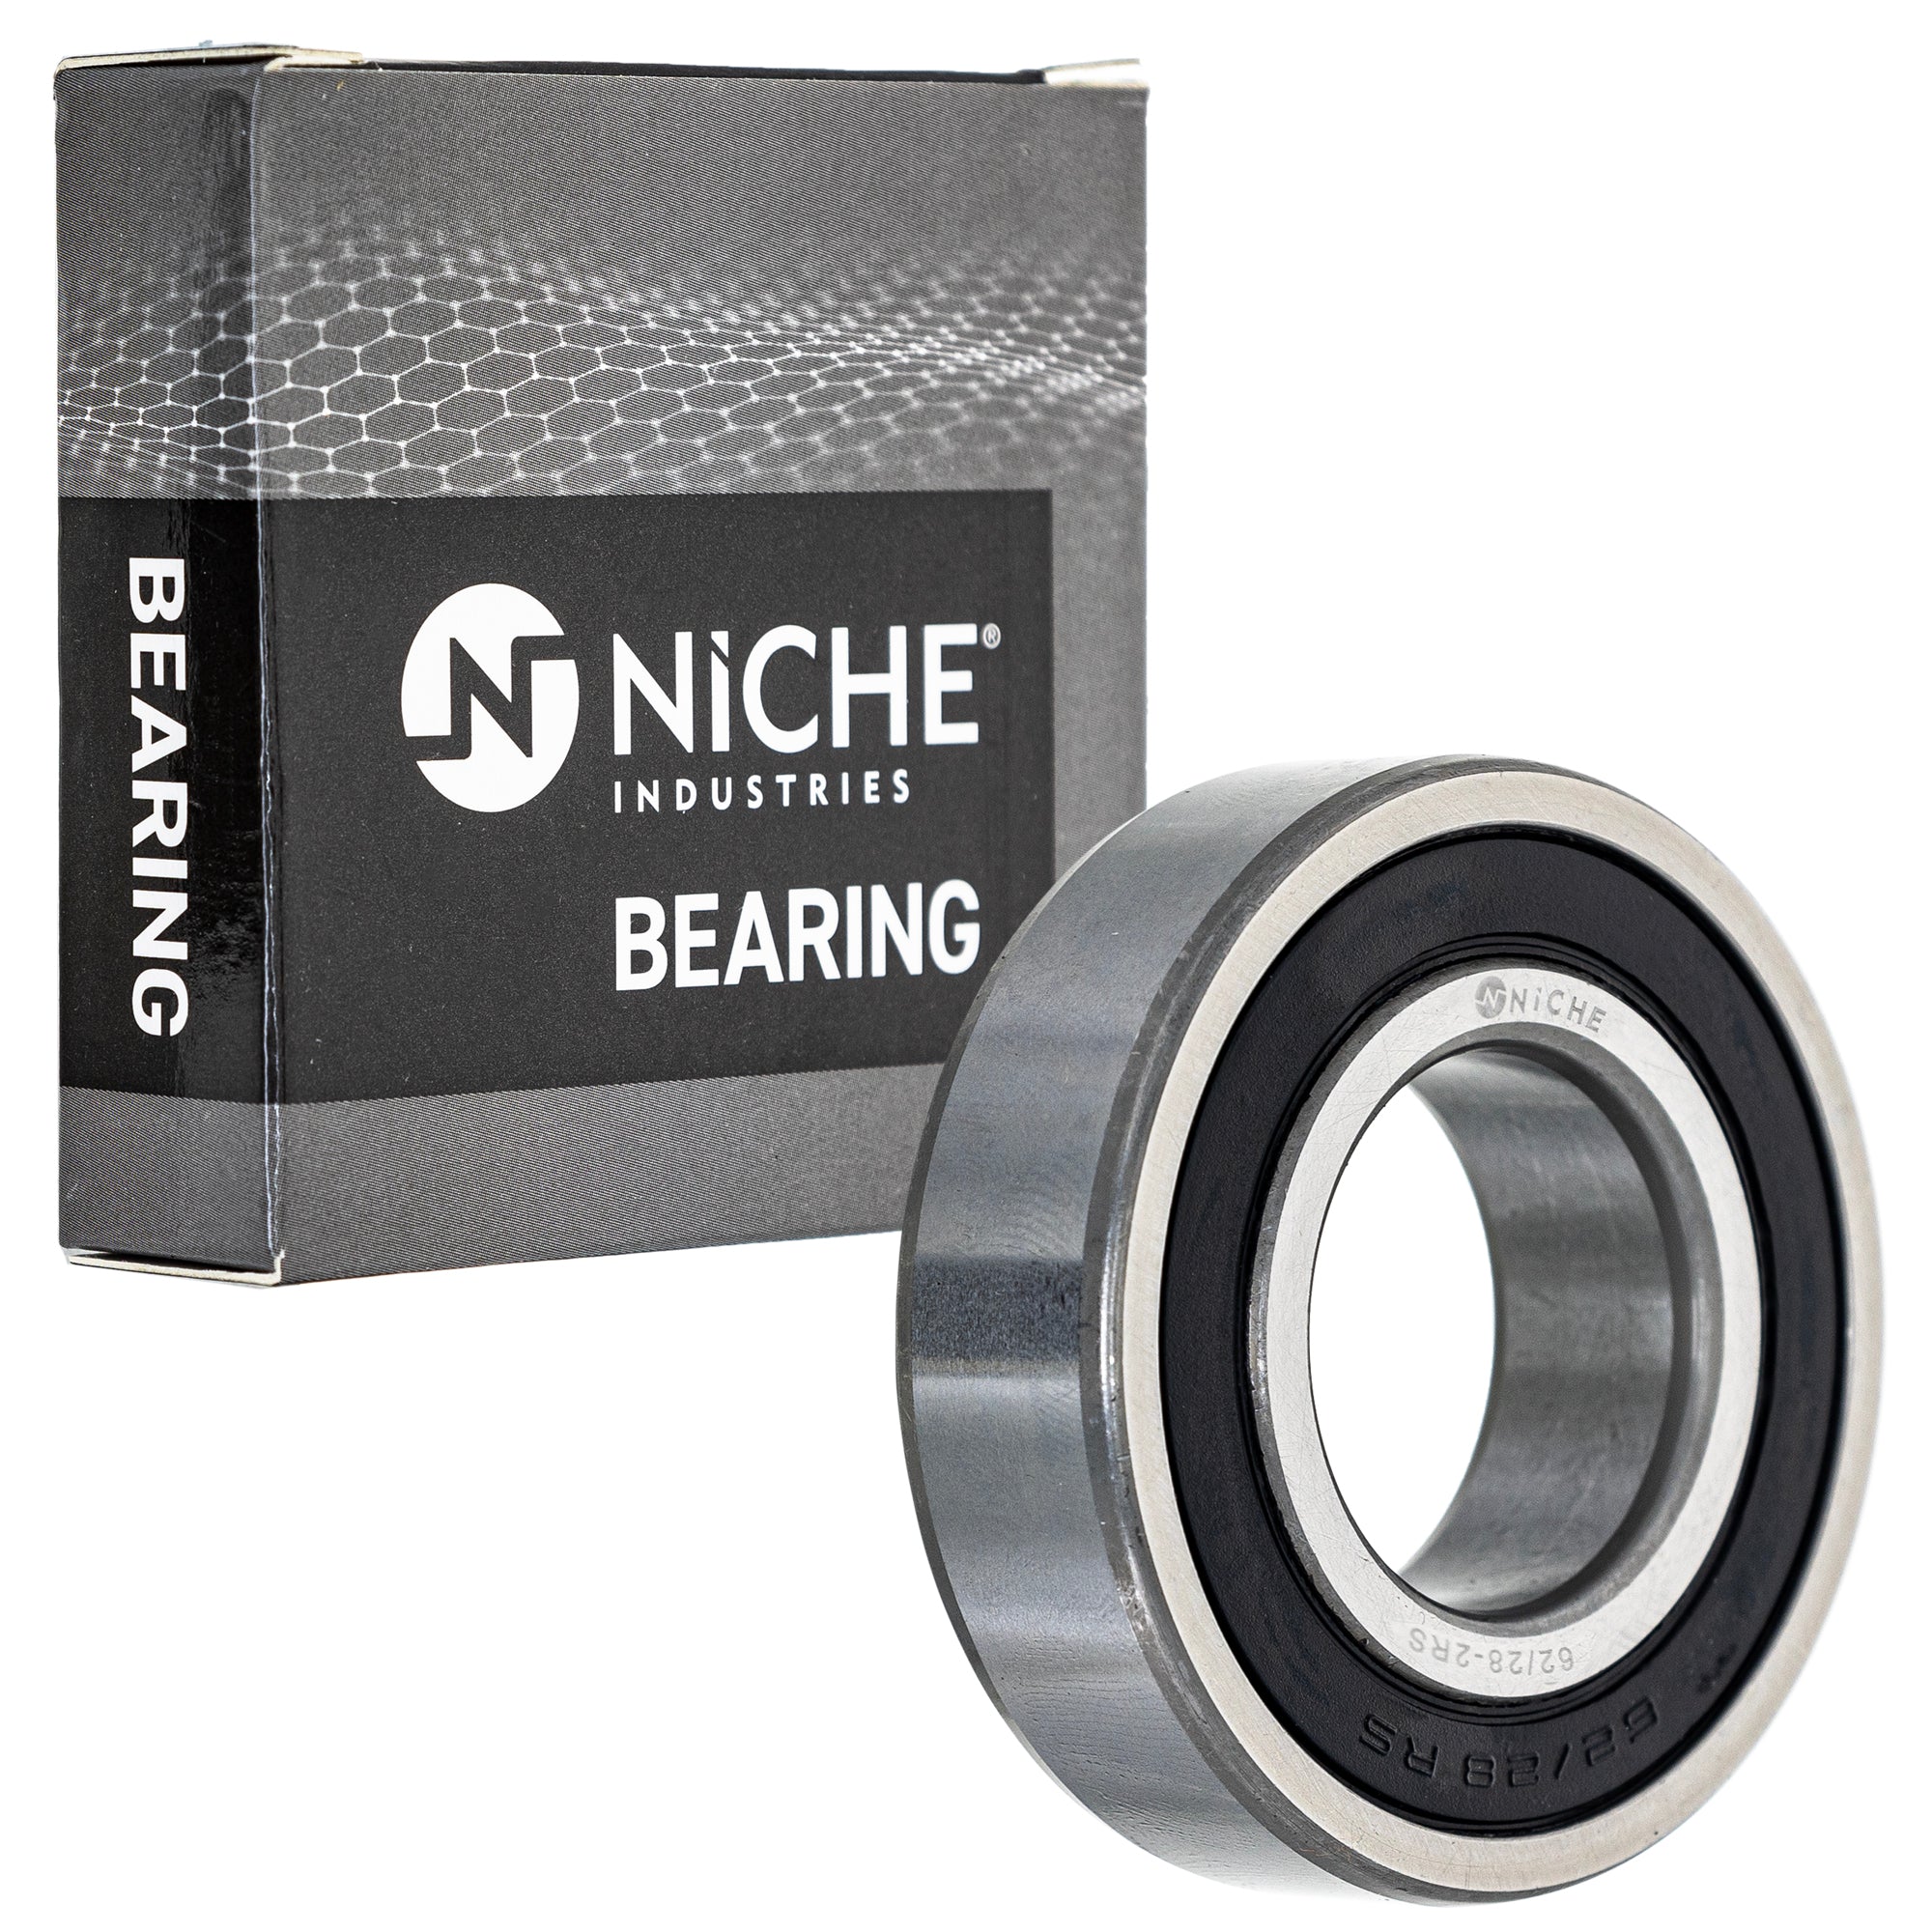 NICHE 519-CBB2235R Bearing 2-Pack for zOTHER YZF VFR750R TRX450